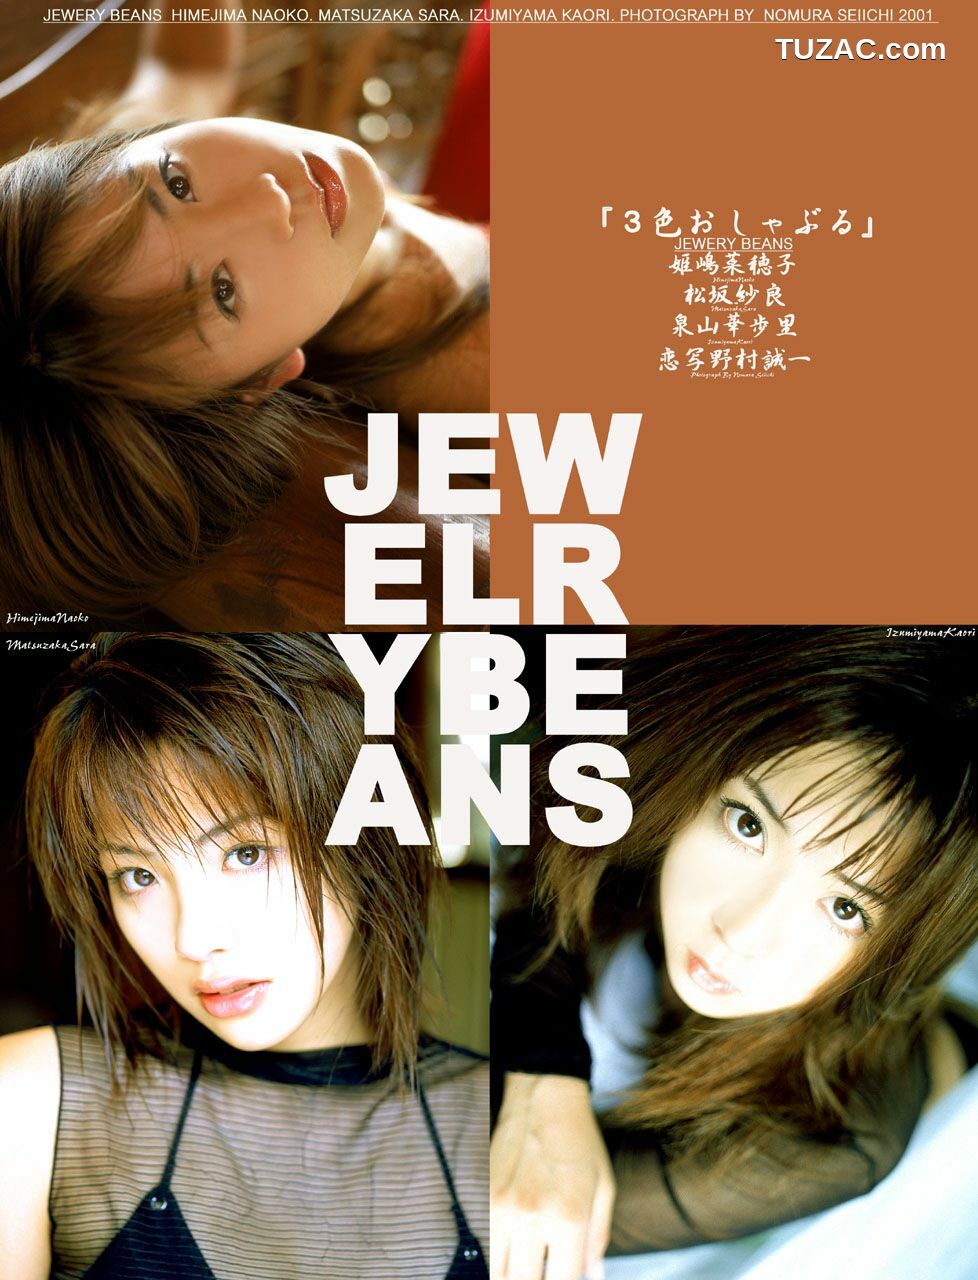 NS Eyes_ SF-No.115 Naoko Himejima 姫嶋菜穂子 Jewelry Beans 写真集[32P]